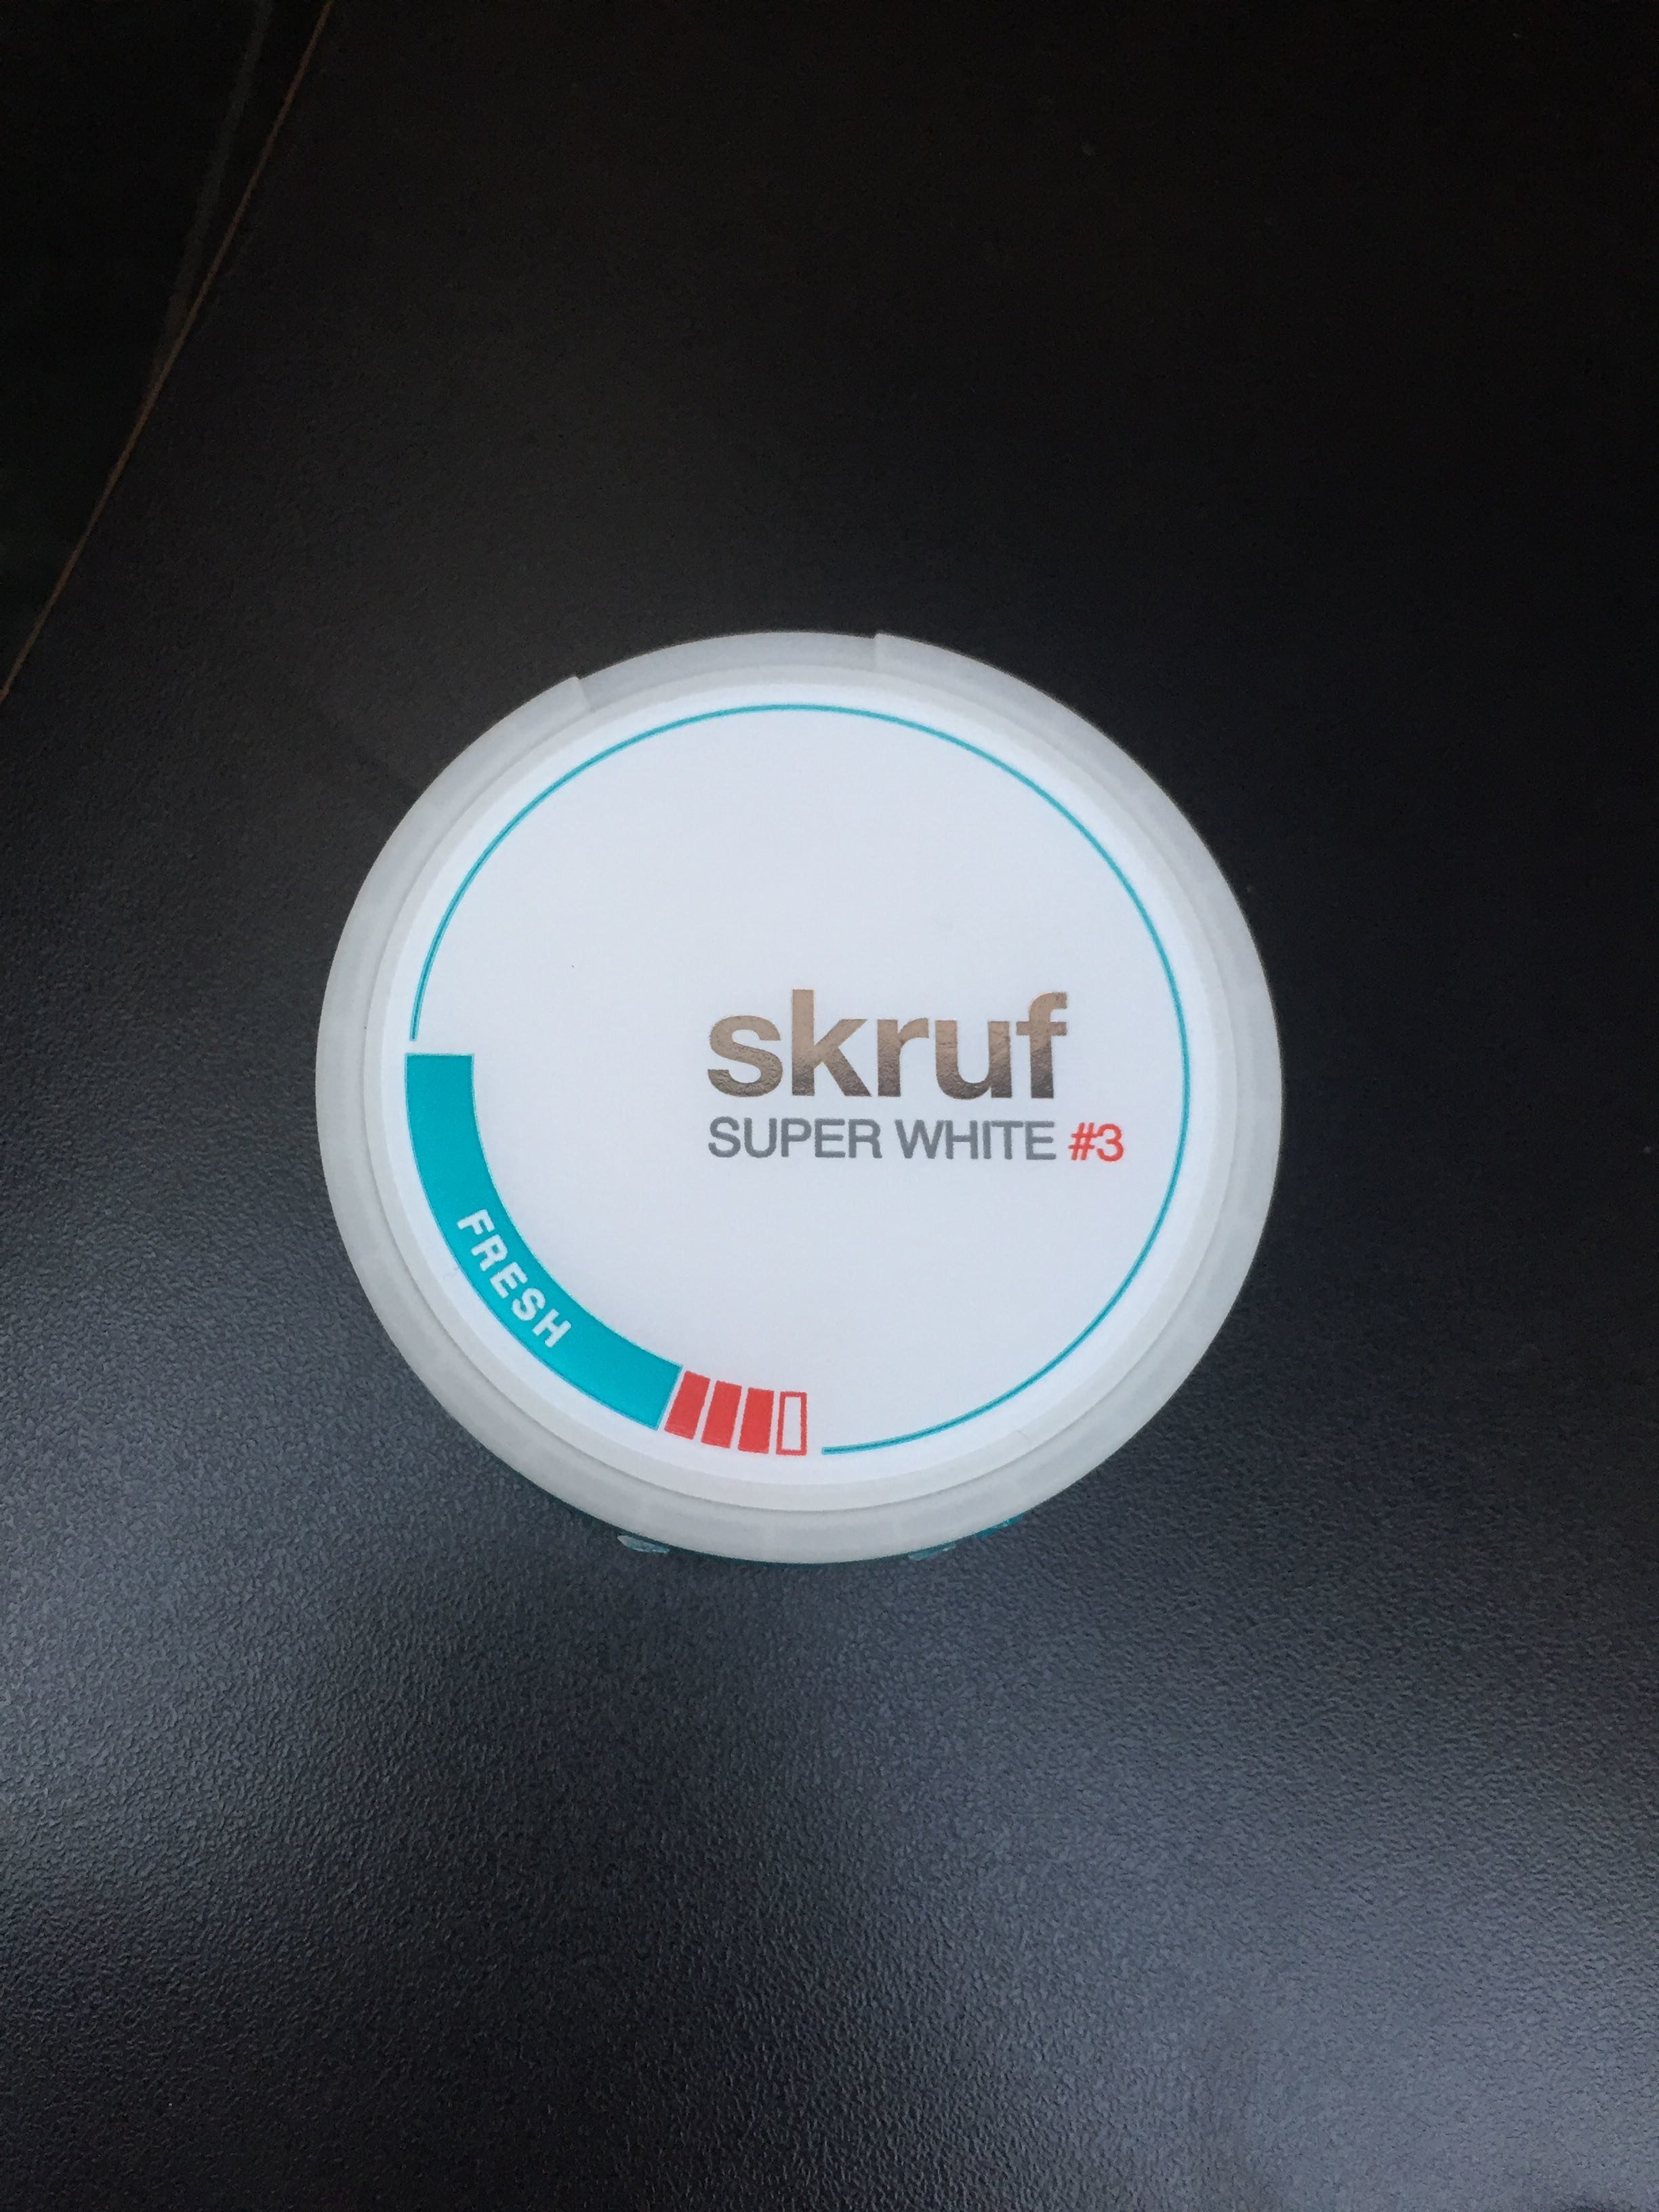 skruf super white - Produit - de